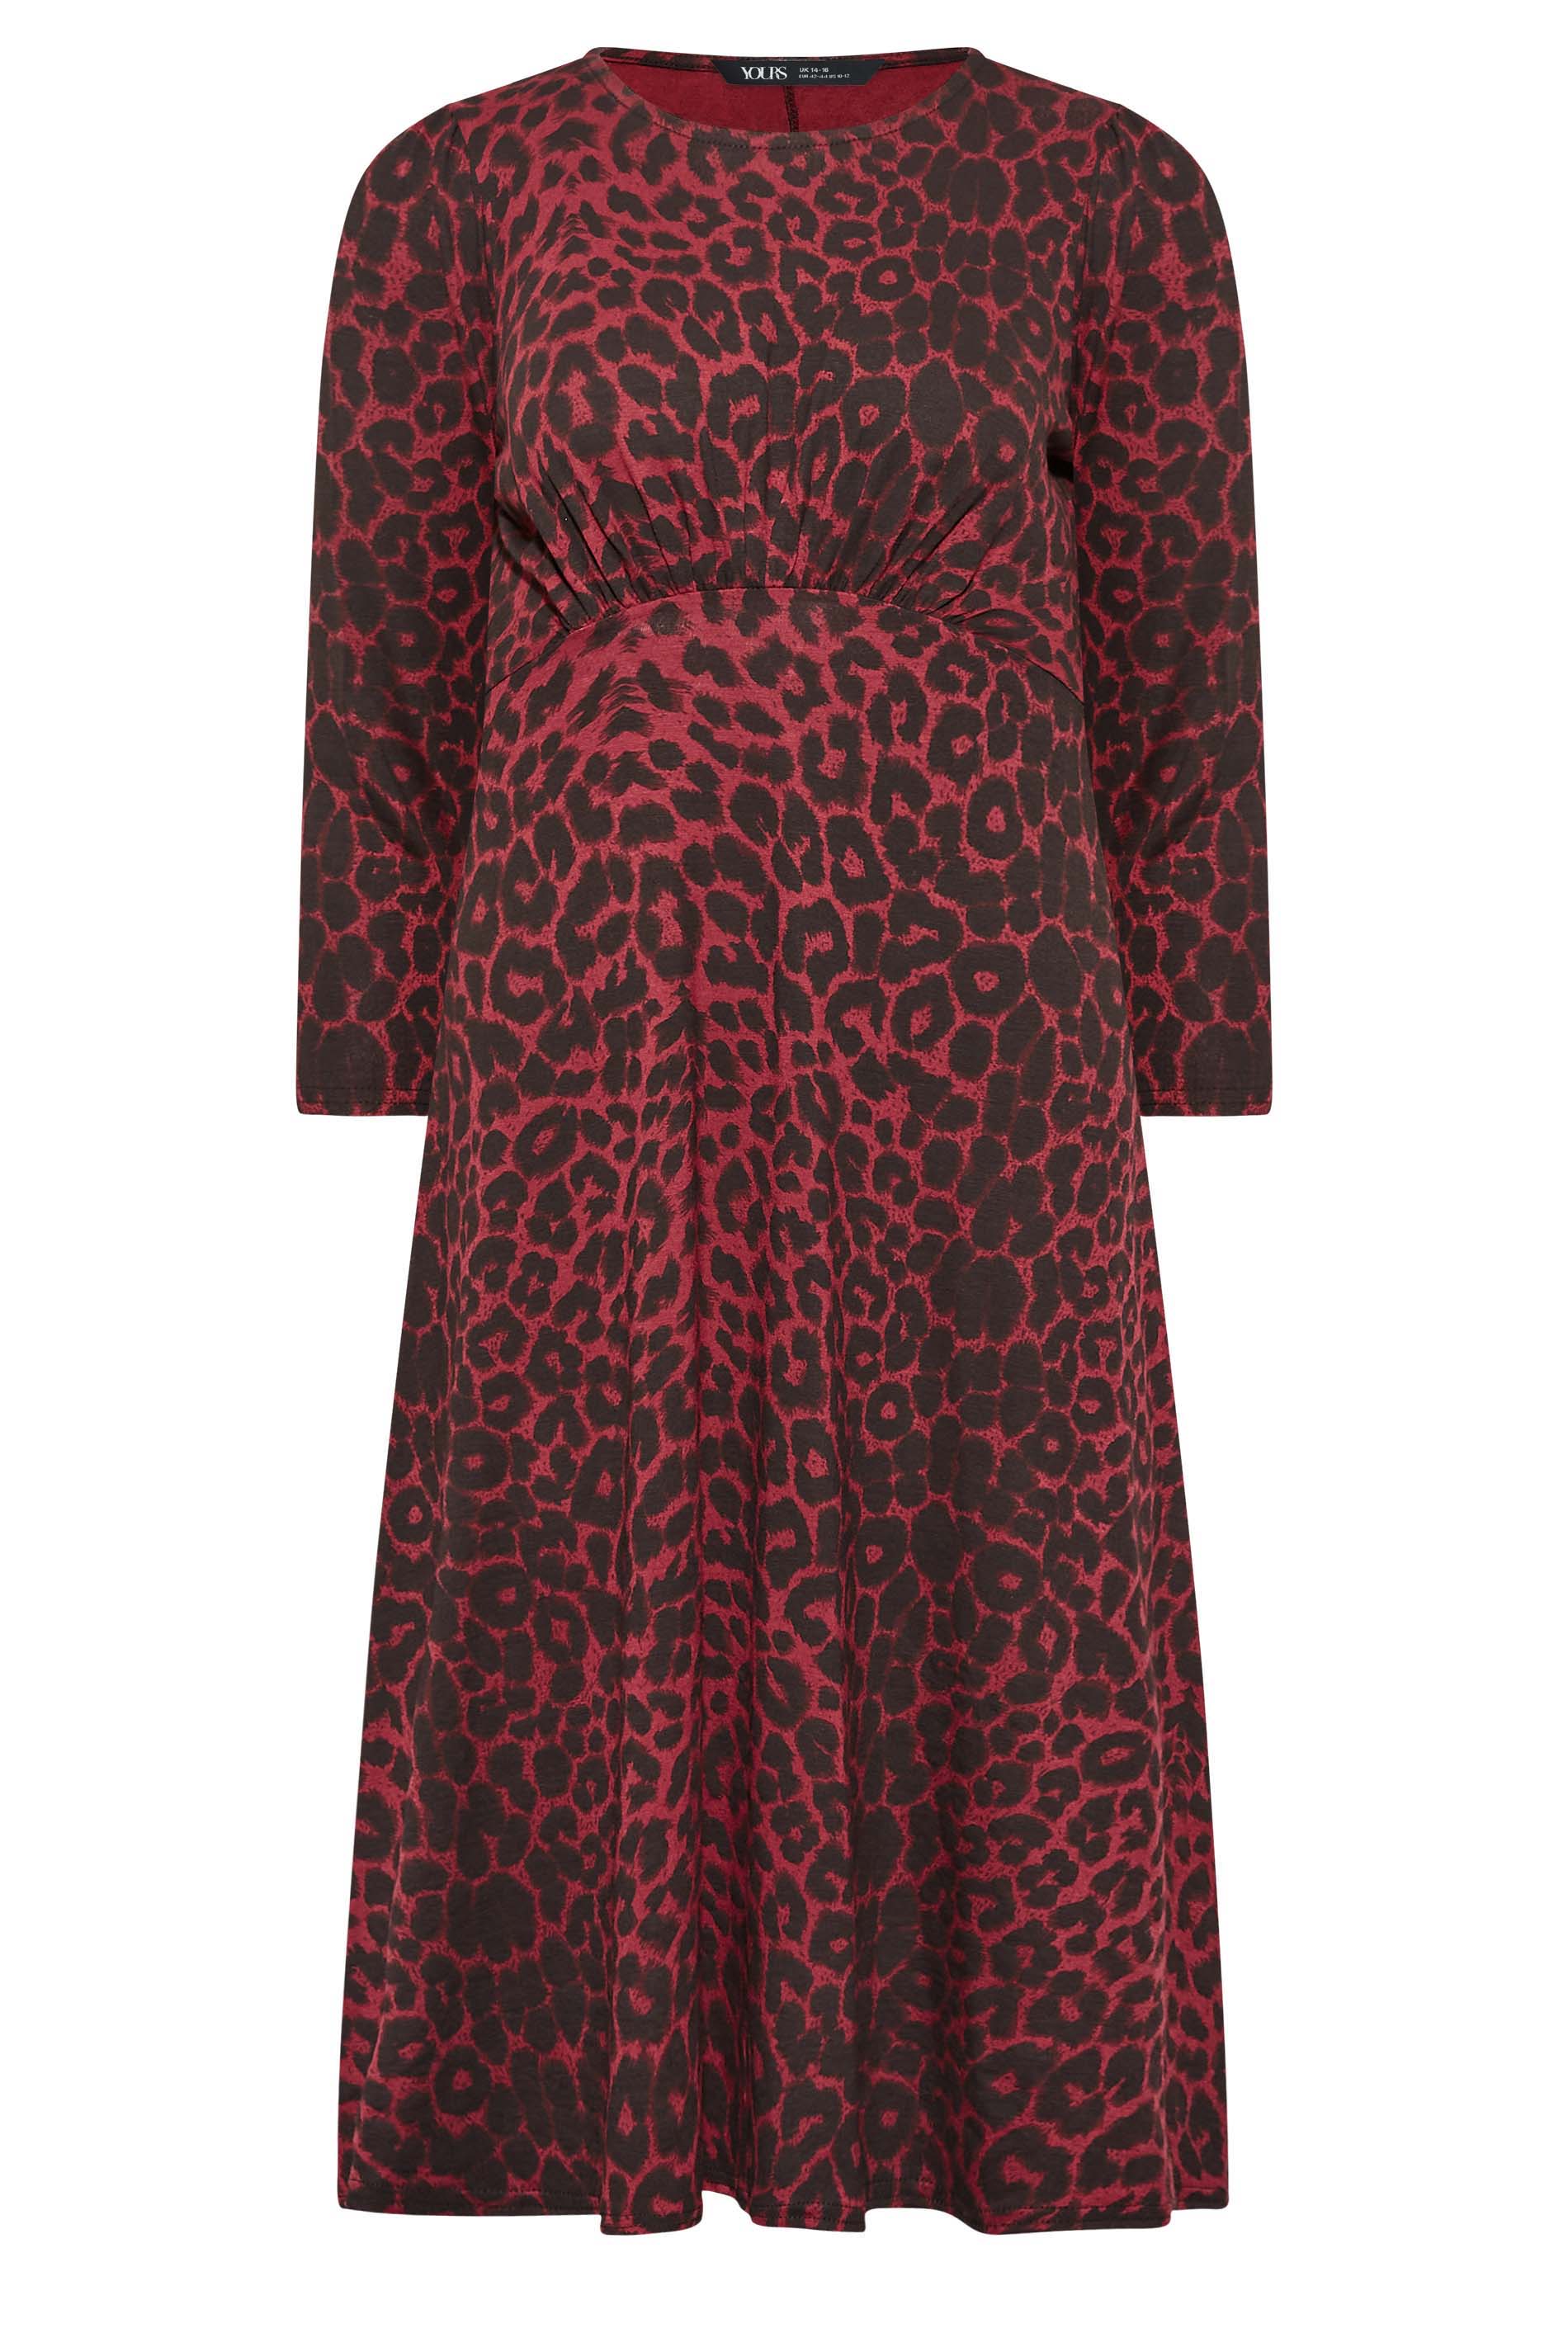 ødelagte sundhed betaling YOURS PETITE Plus Size Curve Dark Red Leopard Print Midi Dress | Yours  Clothing